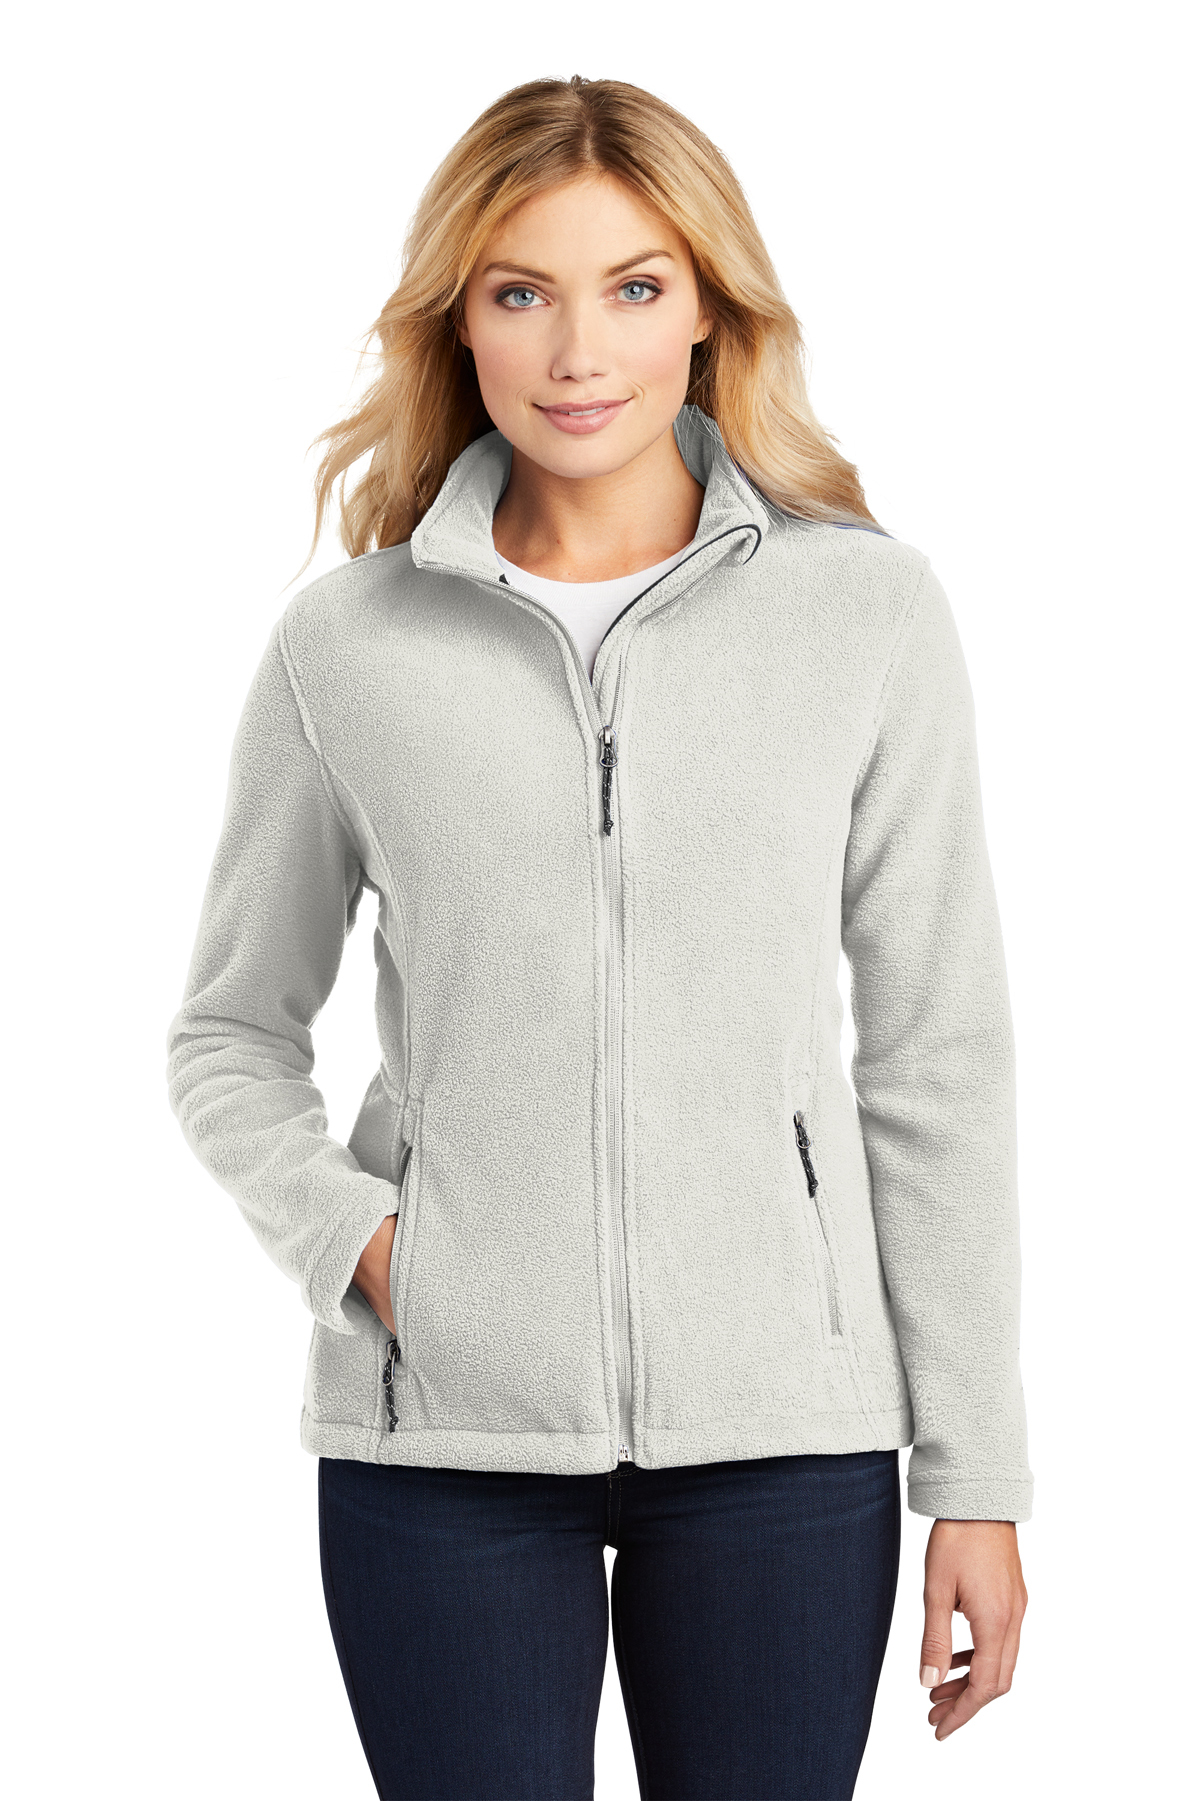 Port Authority® Ladies Colorblock Value Fleece Jacket - L216